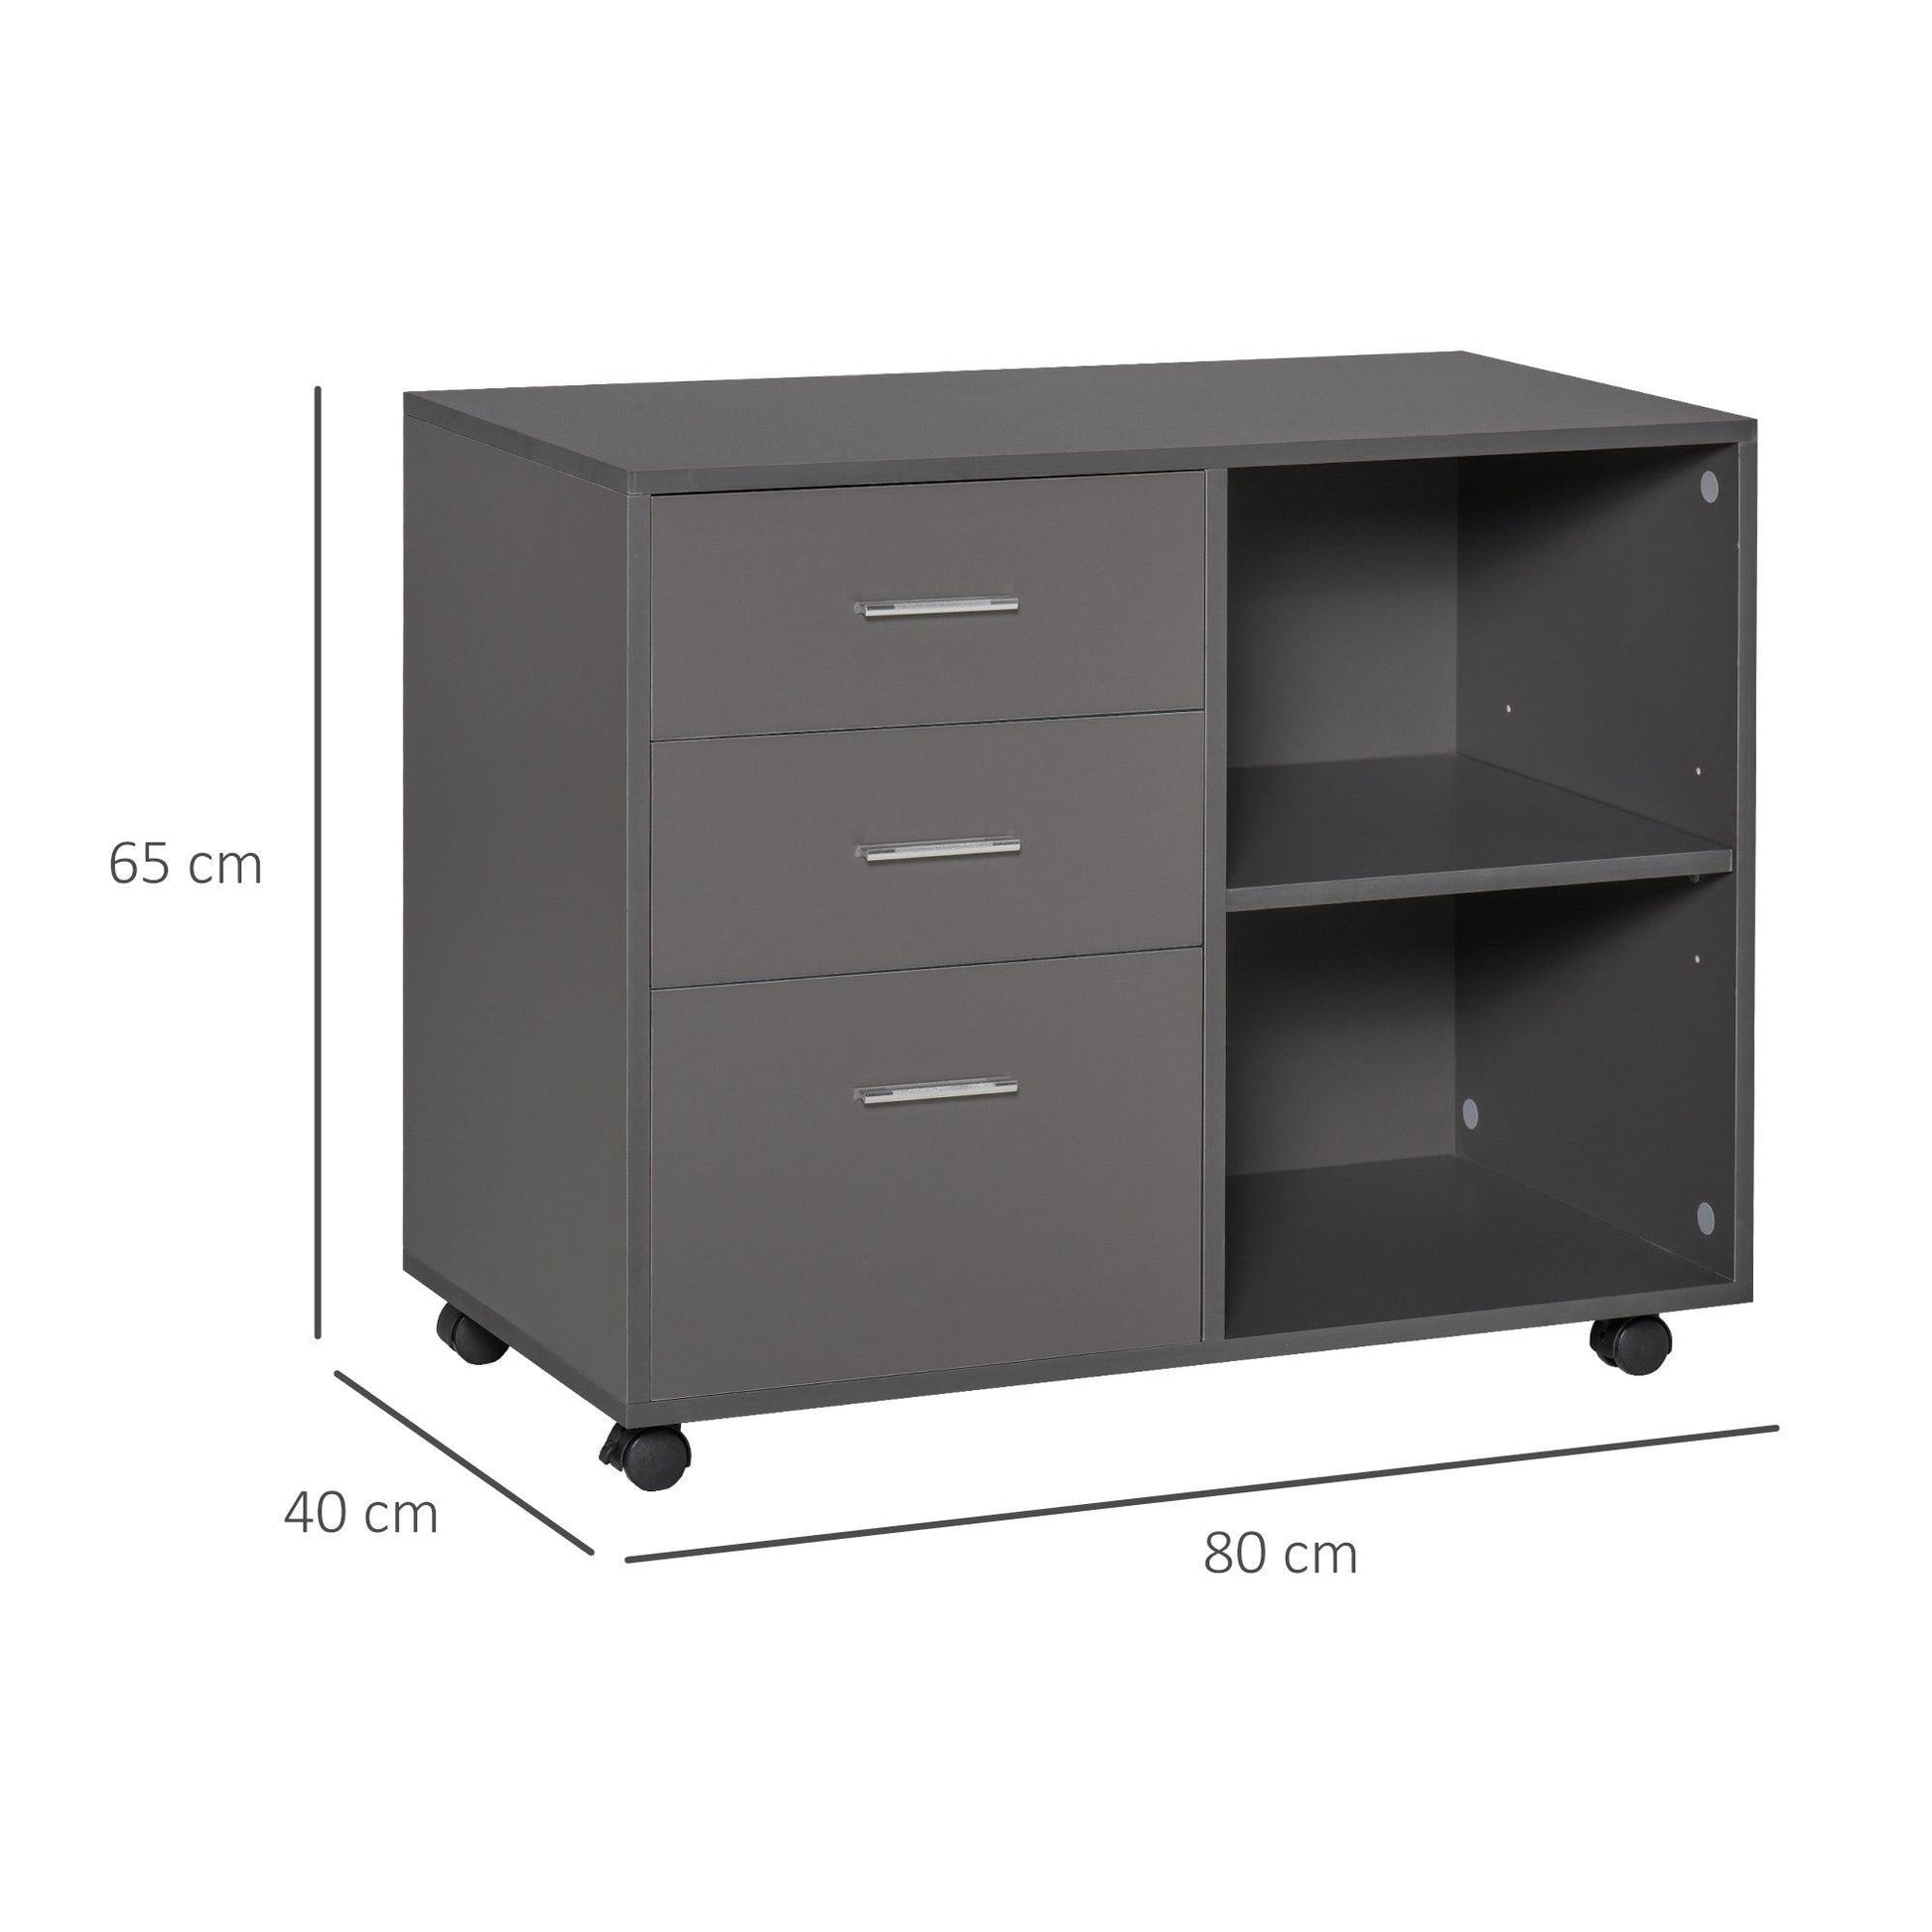 HOMCOM Printer Stand with Storage: Modern 3 Drawers & Shelves - ALL4U RETAILER LTD